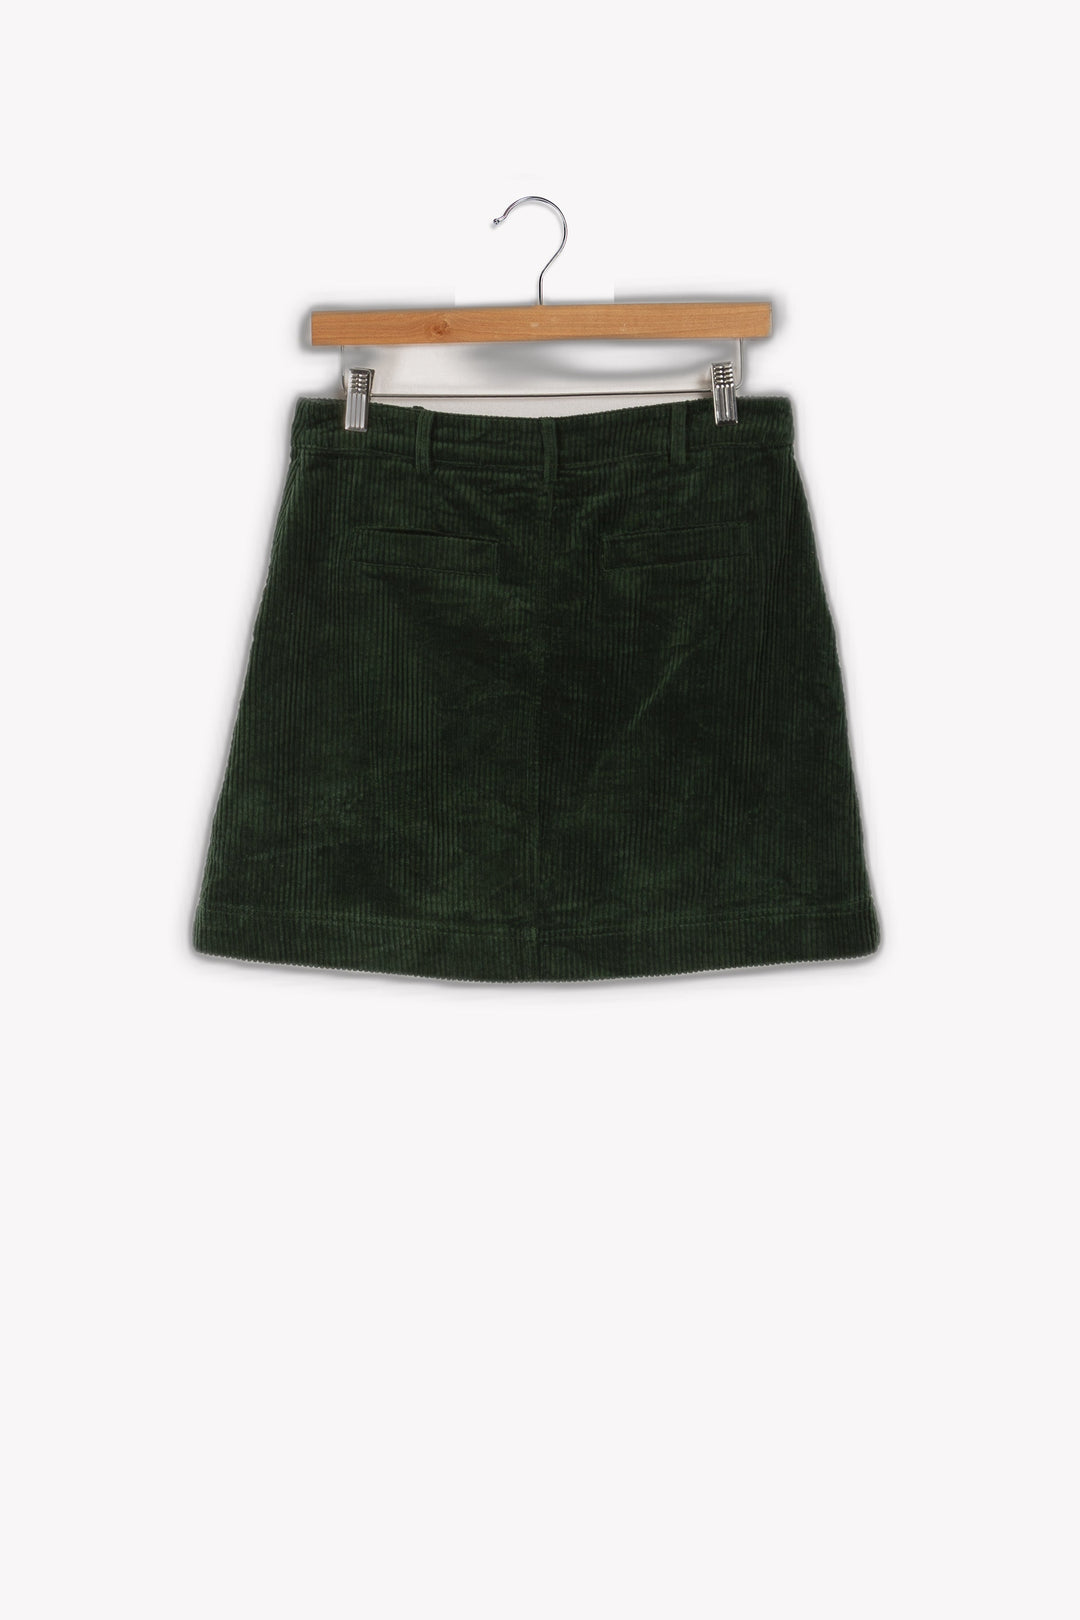 Skirt size 36